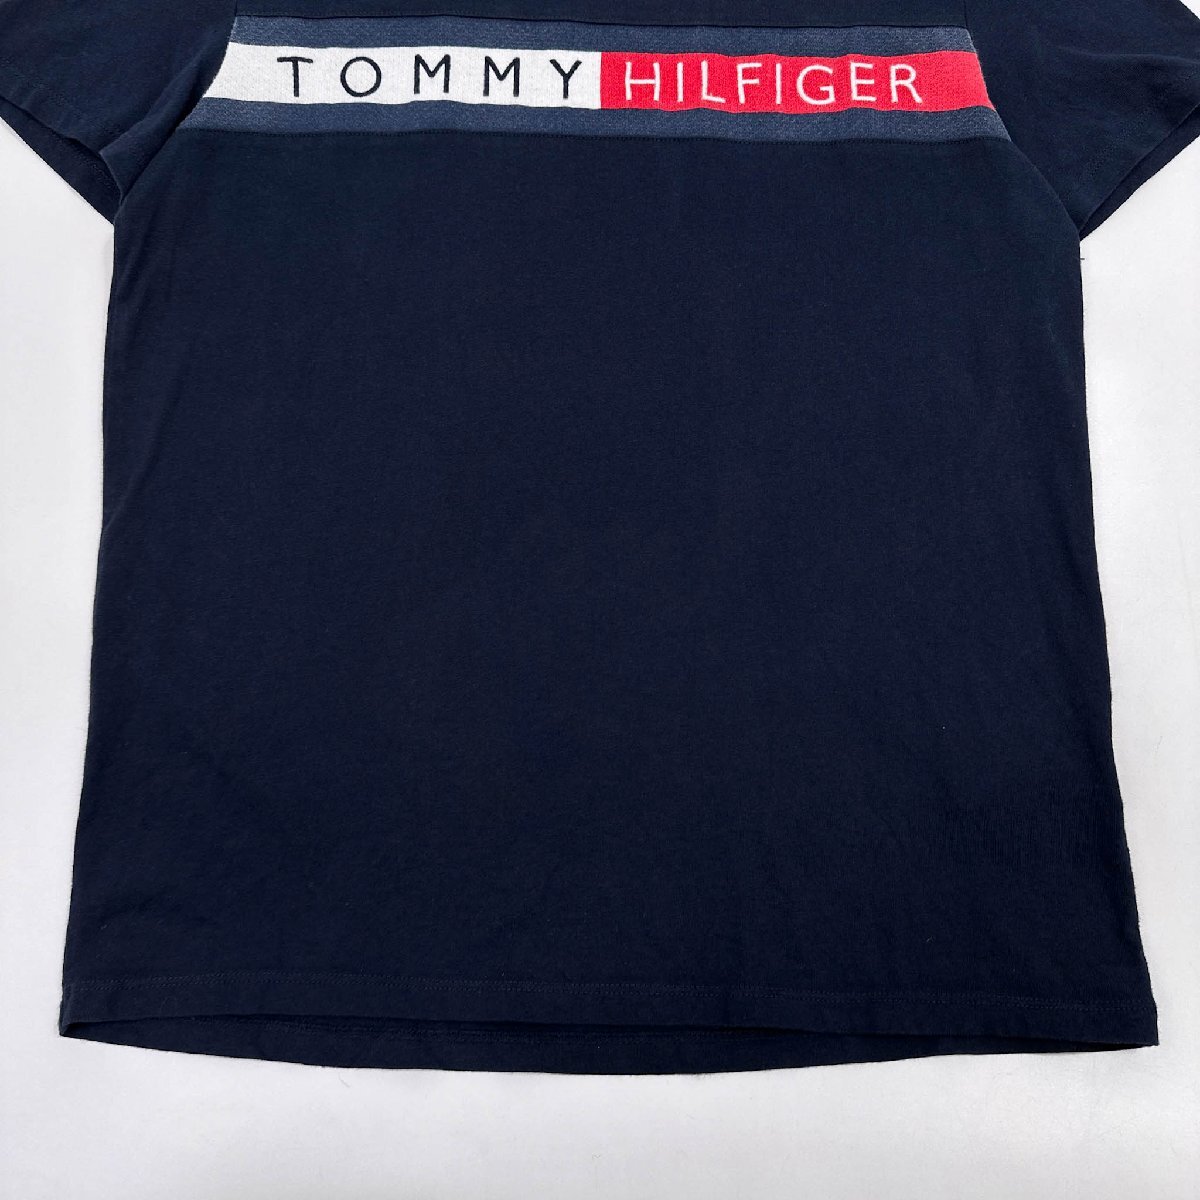 TOMMY HILFIGER トミーヒルフィガー フラッグ ロゴ デザイン 半袖Tシャツ カットソー M/ネイビー/メンズ_画像6